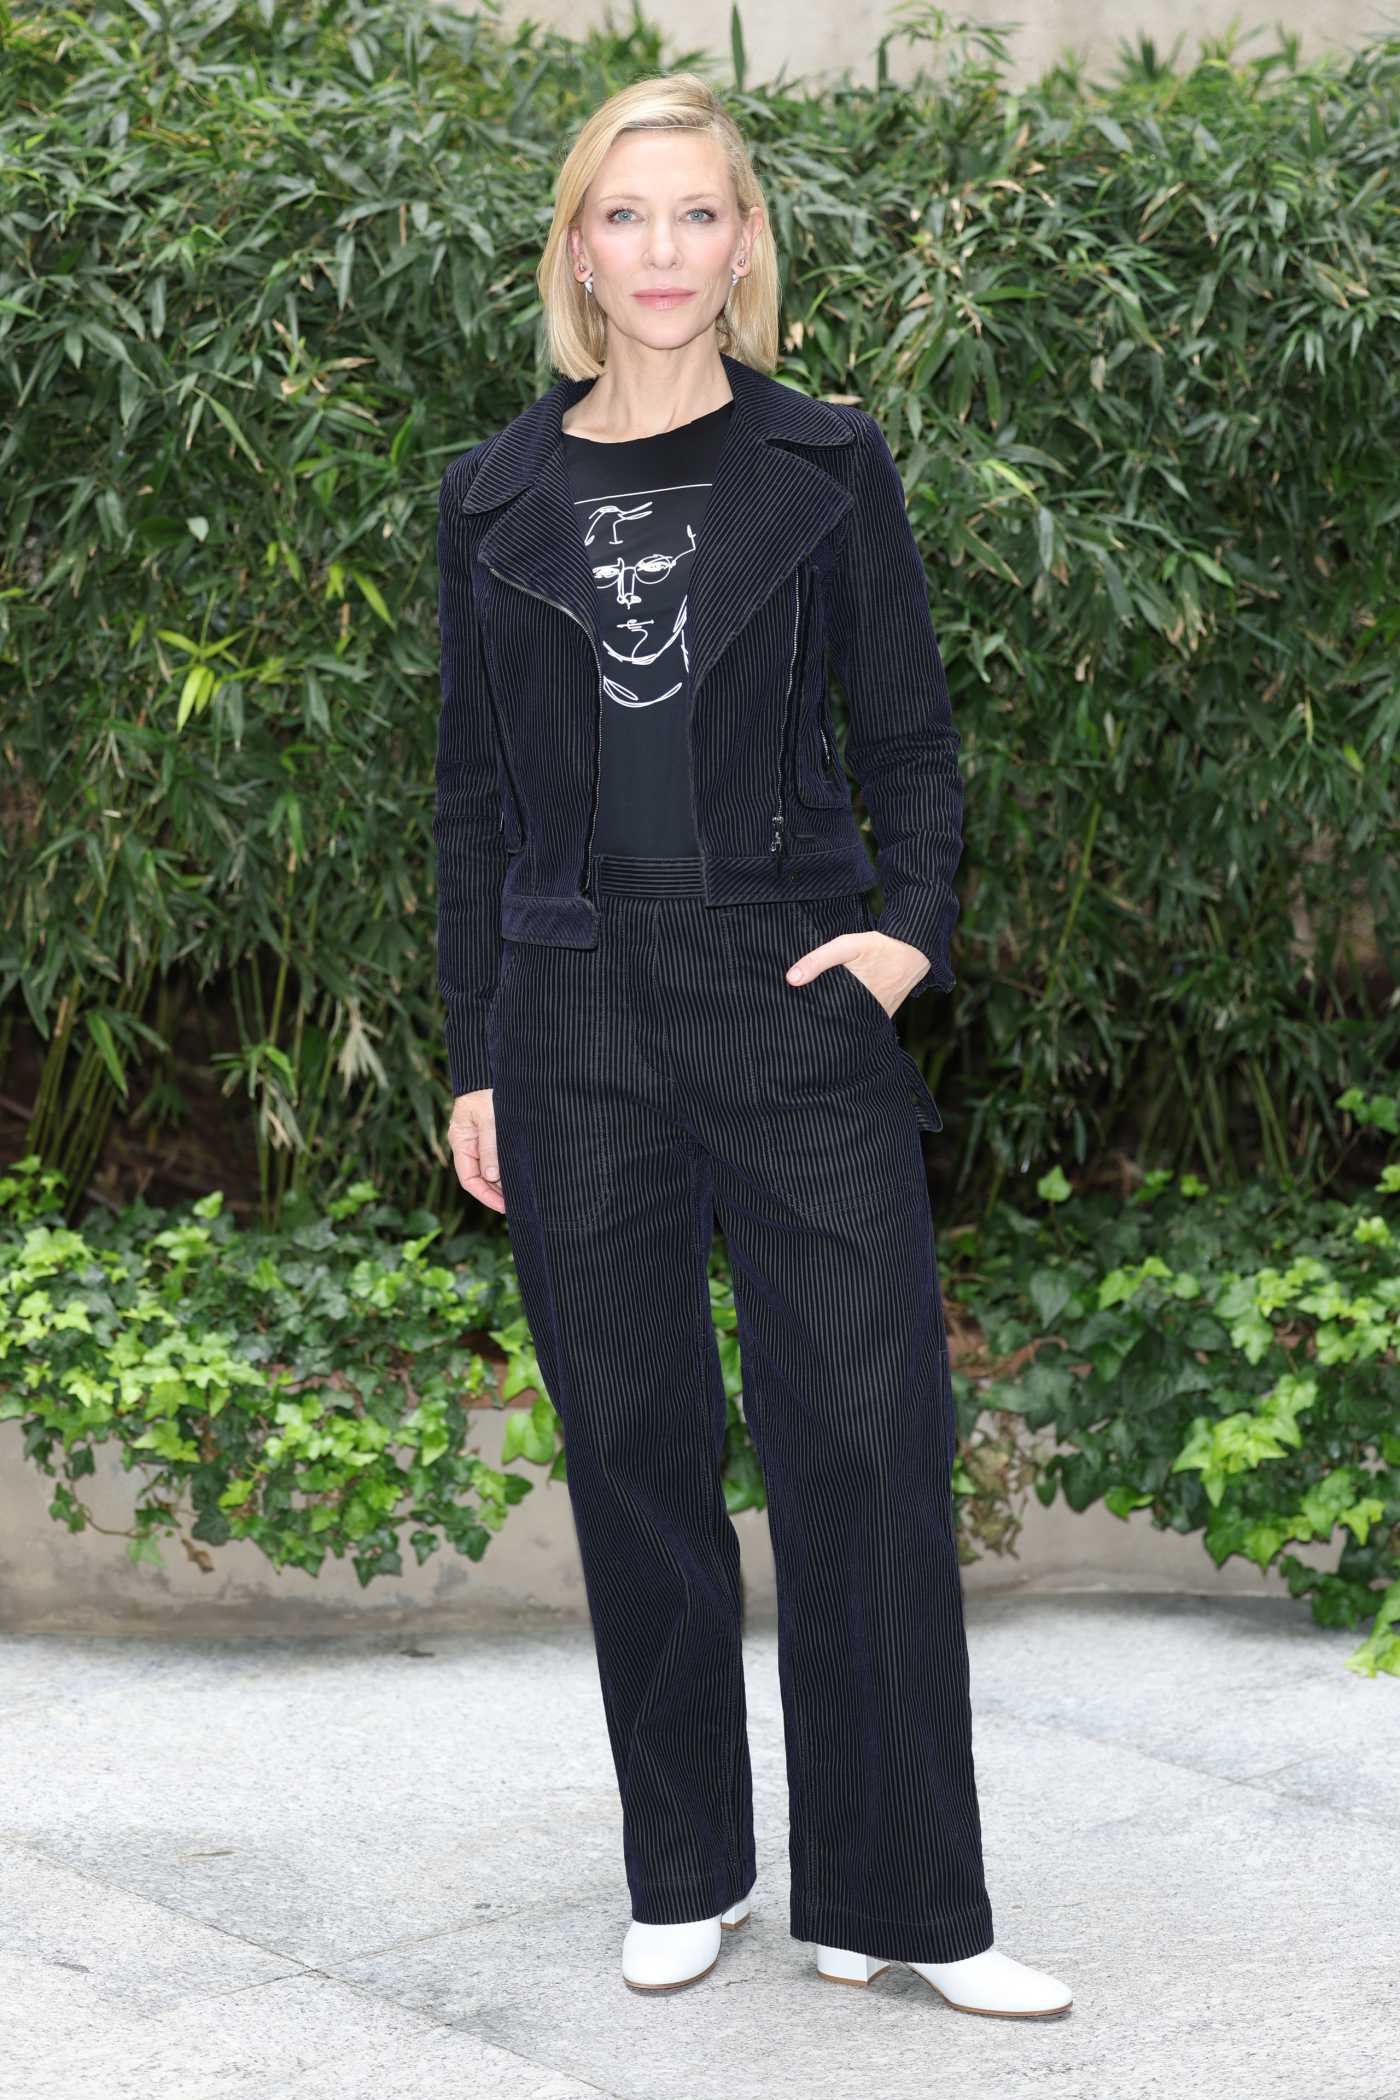 Cate Blanchett Attends the Giorgio Armani Fashion Show During 2022 Milan Fashion Week in Milan 09/25/2022